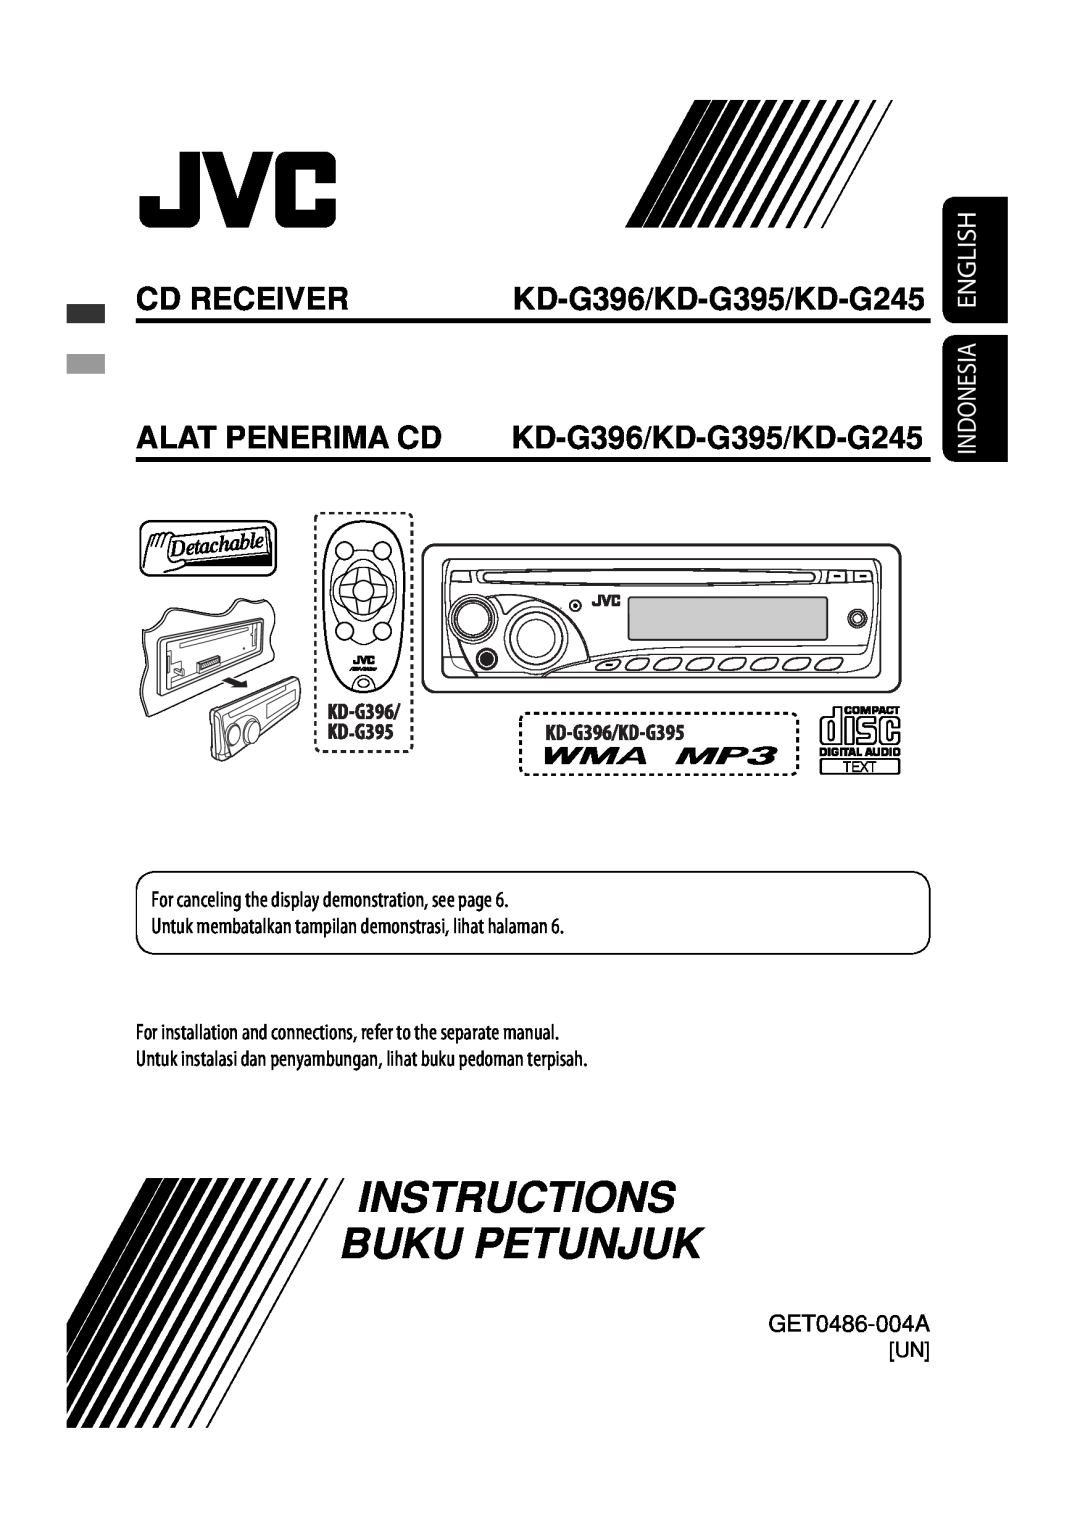 JVC MA372IEN Instructions Buku Petunjuk, KD-G396/KD-G395/KD-G245, Alat Penerima Cd, Indonesia English, Cd Receiver 